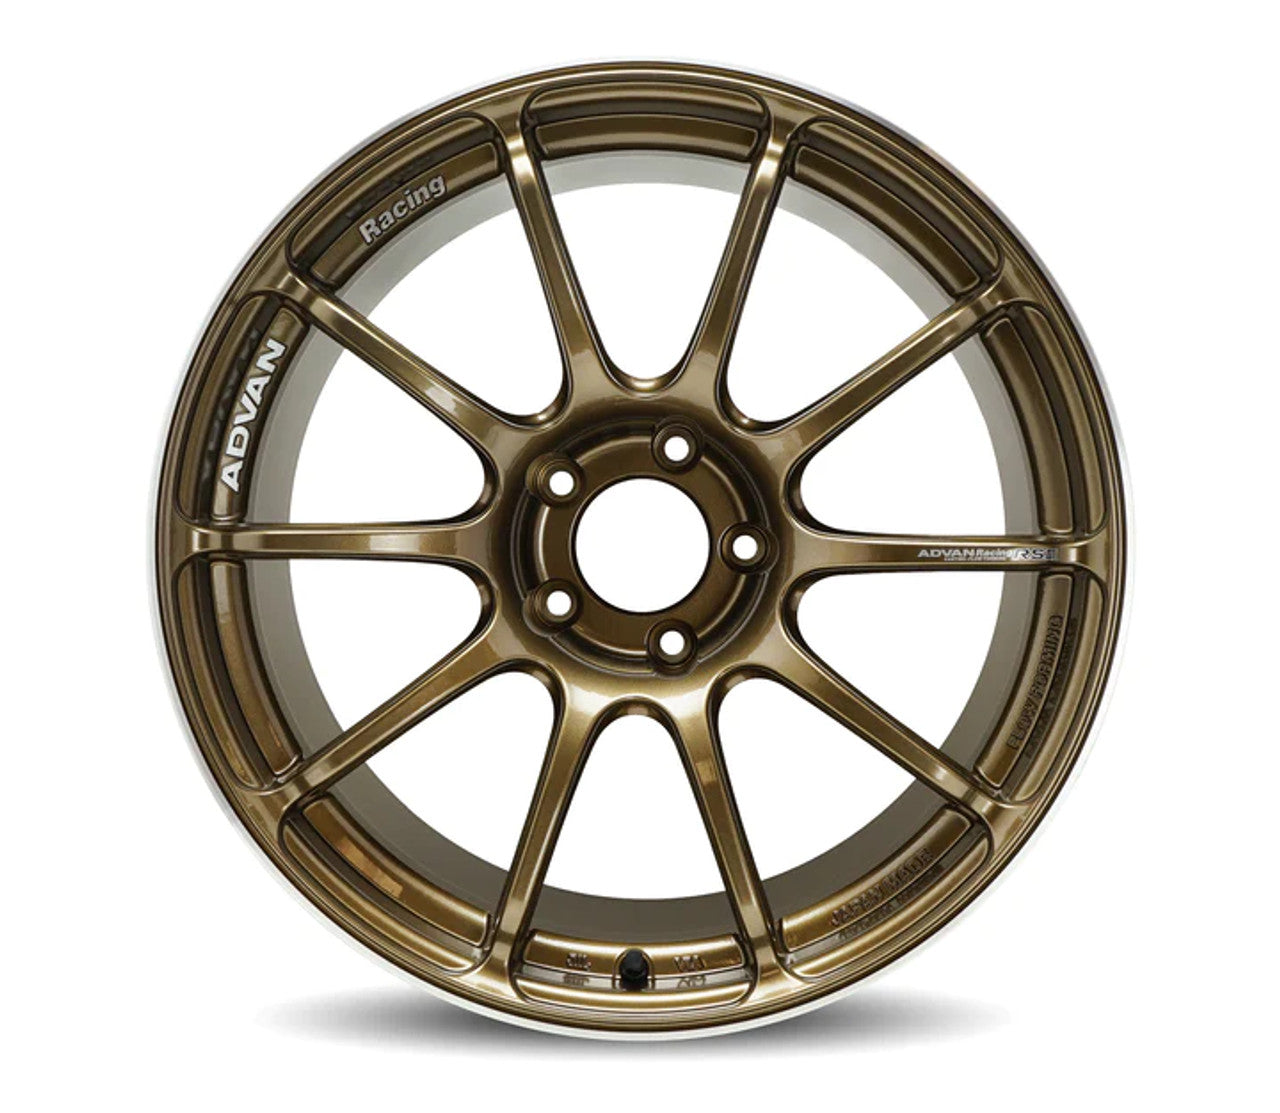 Advan RSIII 18x9.5 +45 5-114.3 Umber Bronze Metallic & Ring Wheel